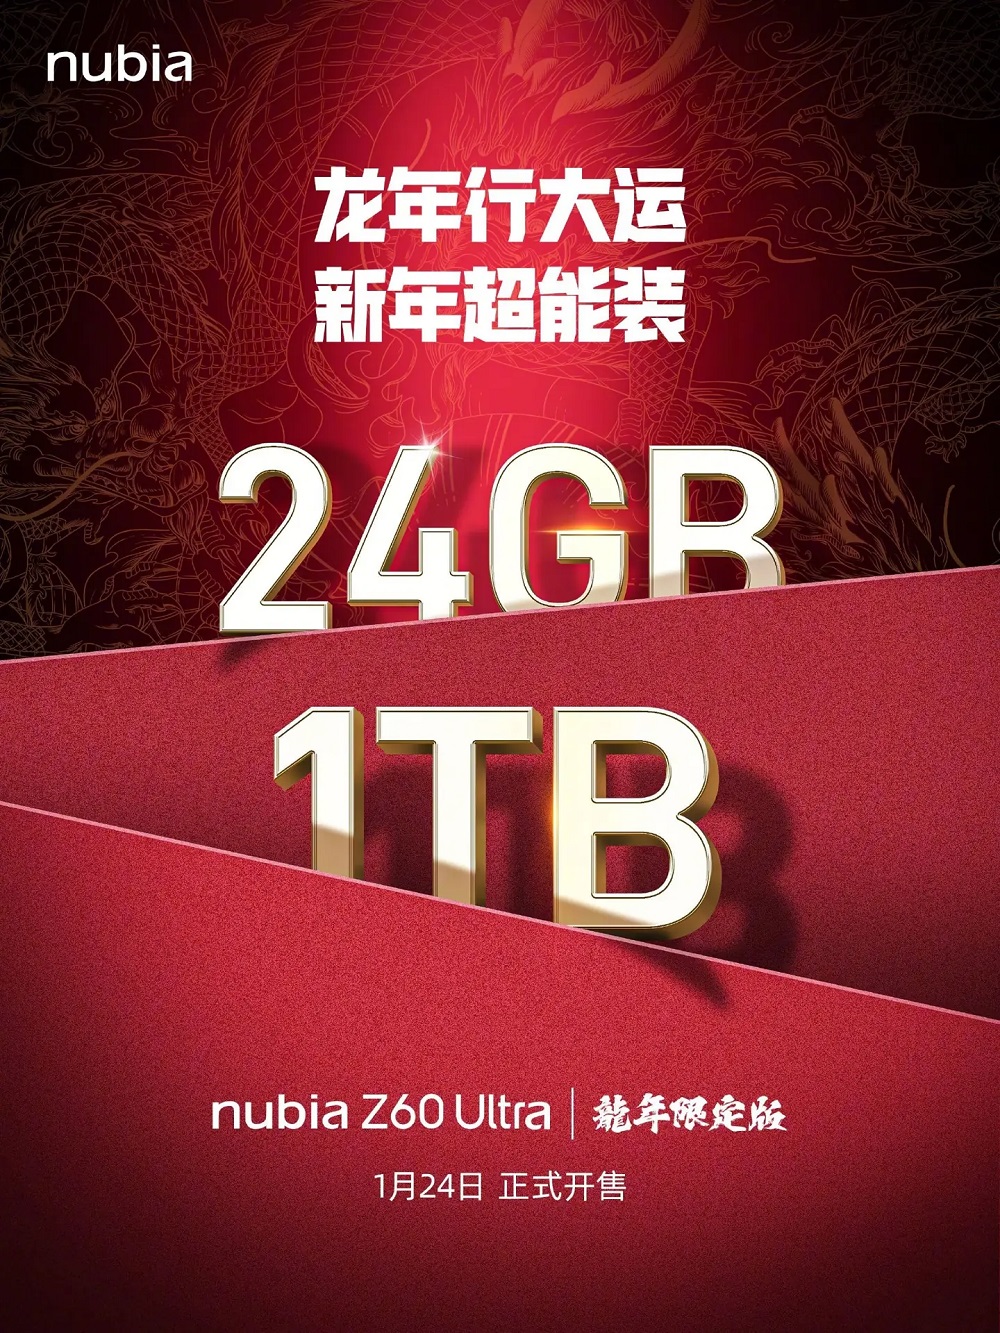 Смартфон Nubia Z60 Ultra Year of the Dragon Limited Edition дебютирует 24 января